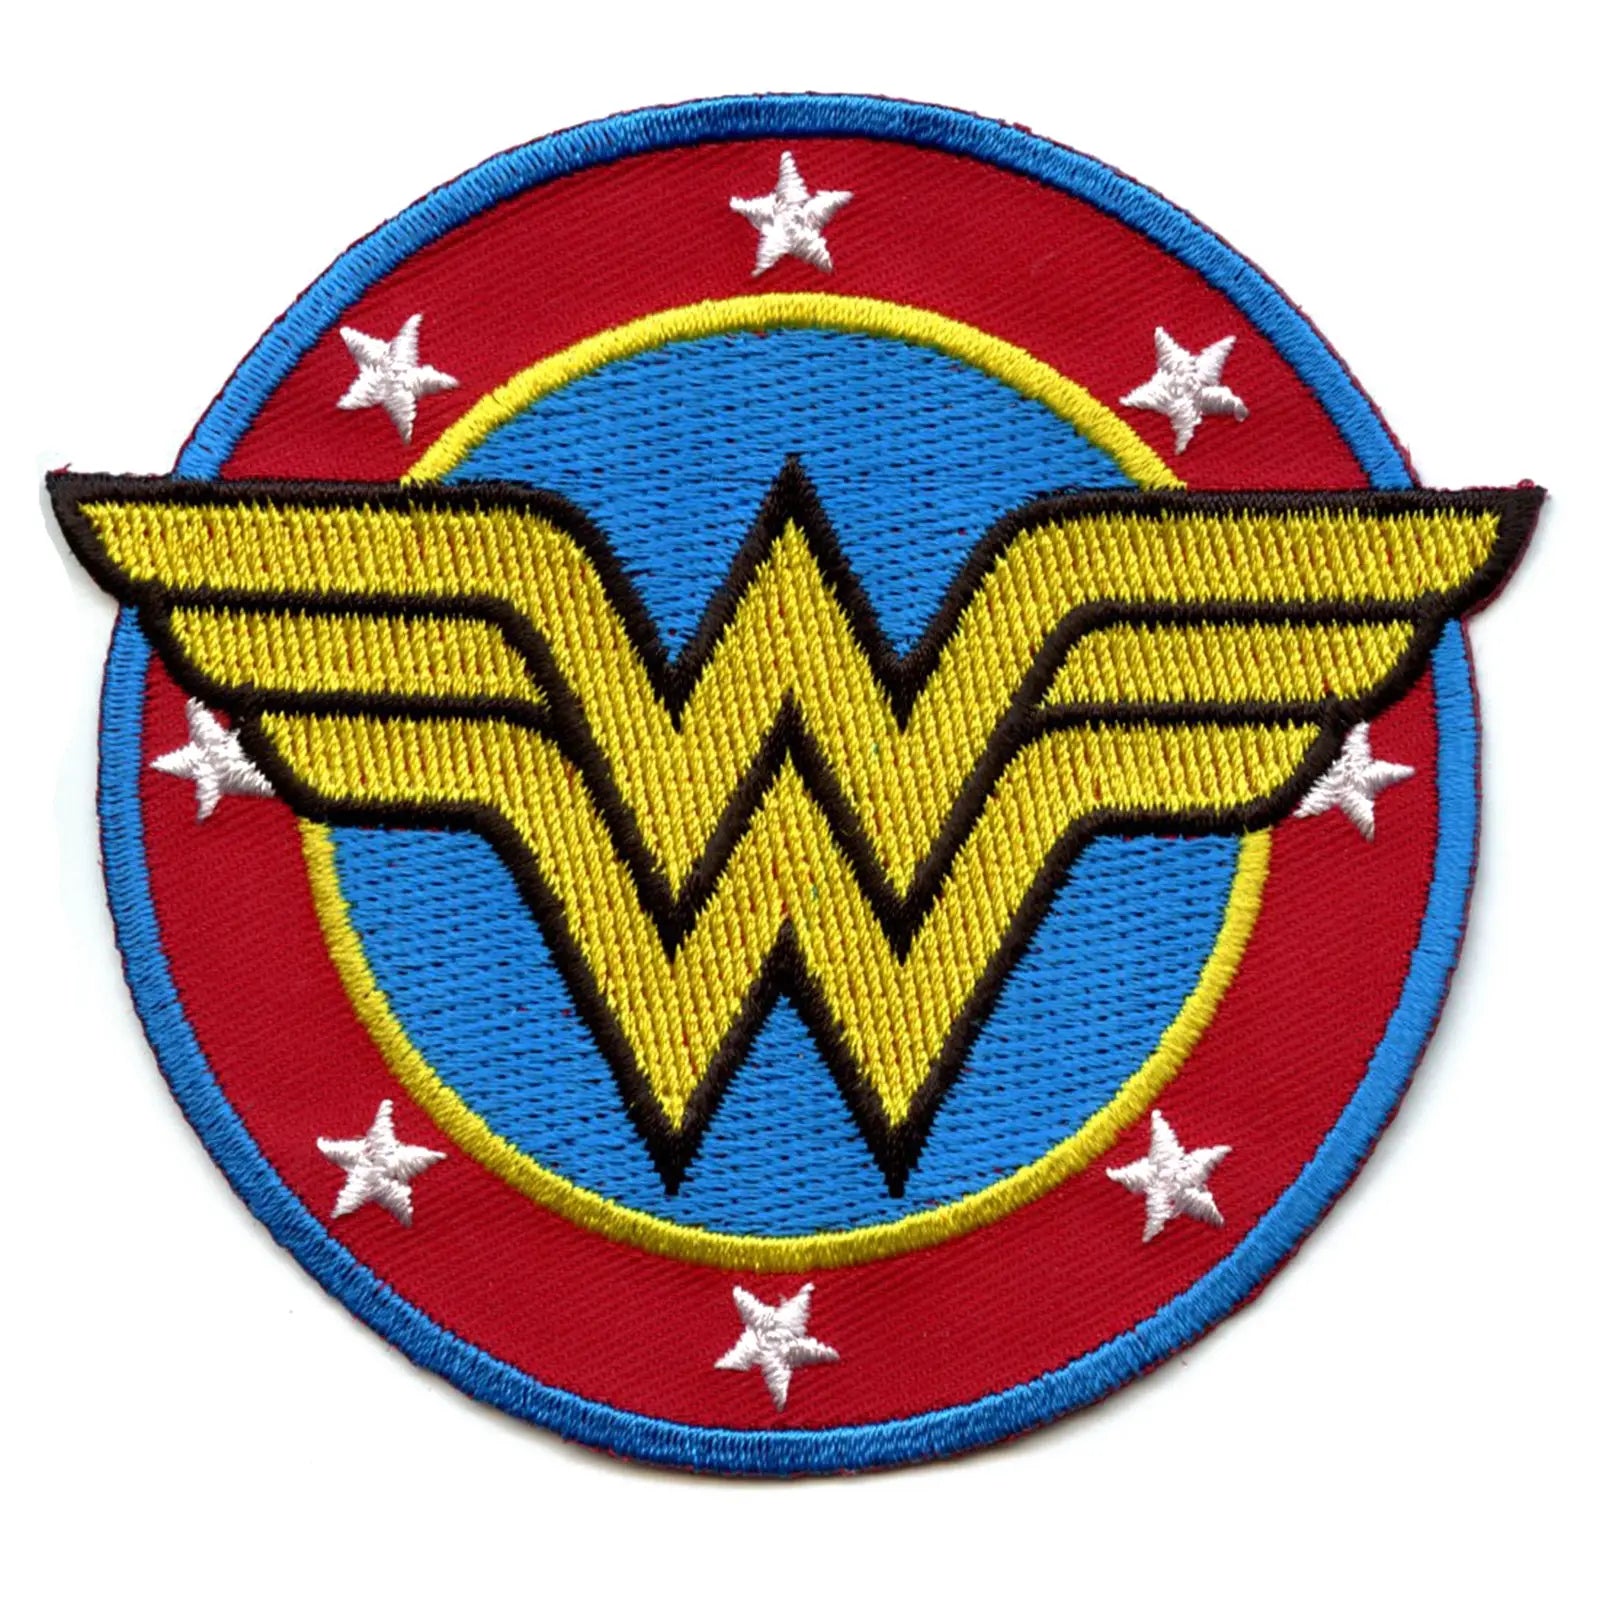 Dc Comics Wonder Woman Shield Logo Iron on Patch 